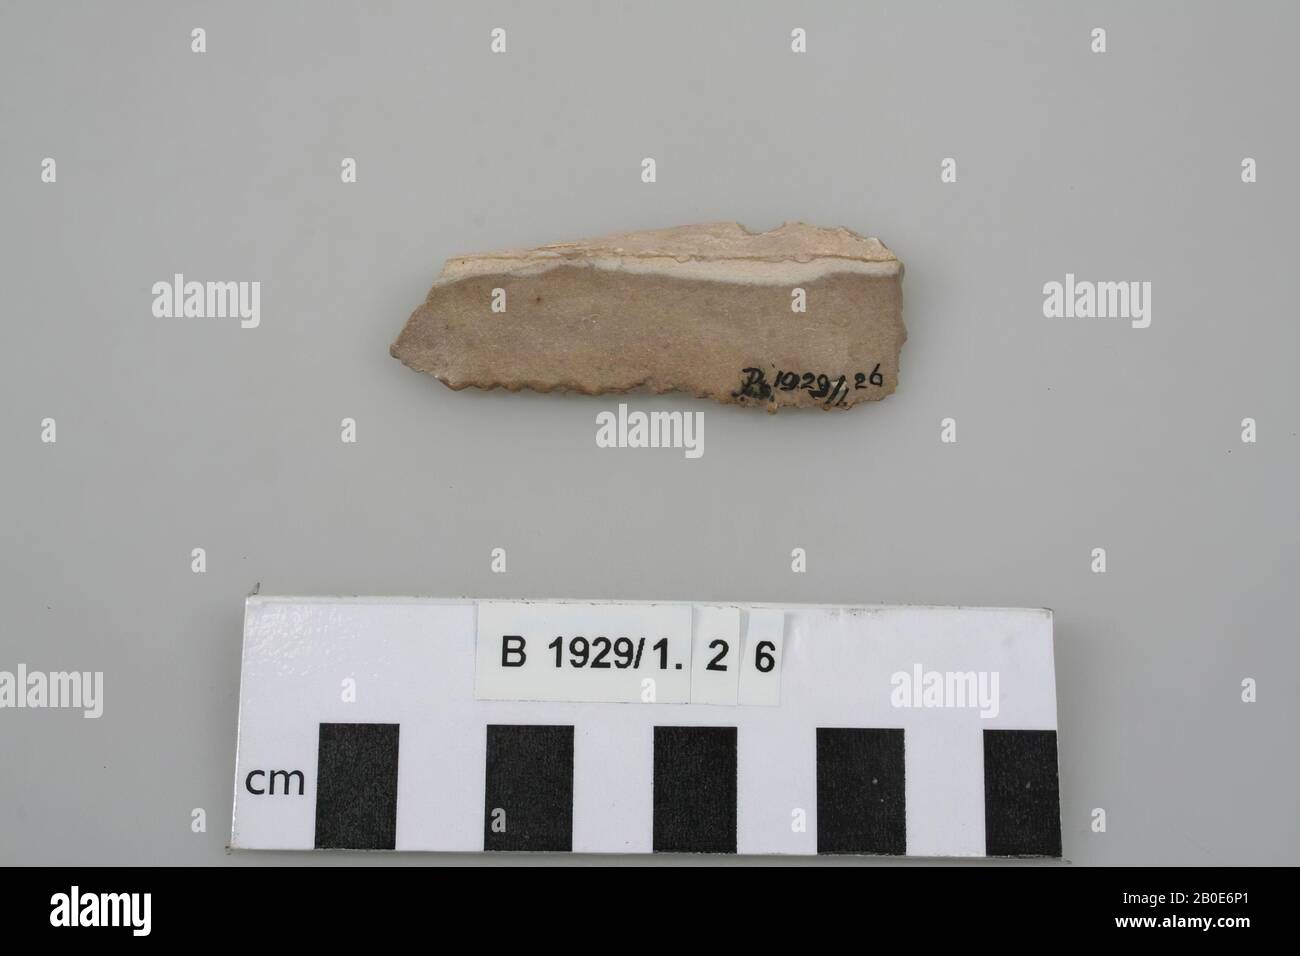 Ancient Near East, tool, stone, flint, L 6.7 cm, Location, Palestine Stock Photo